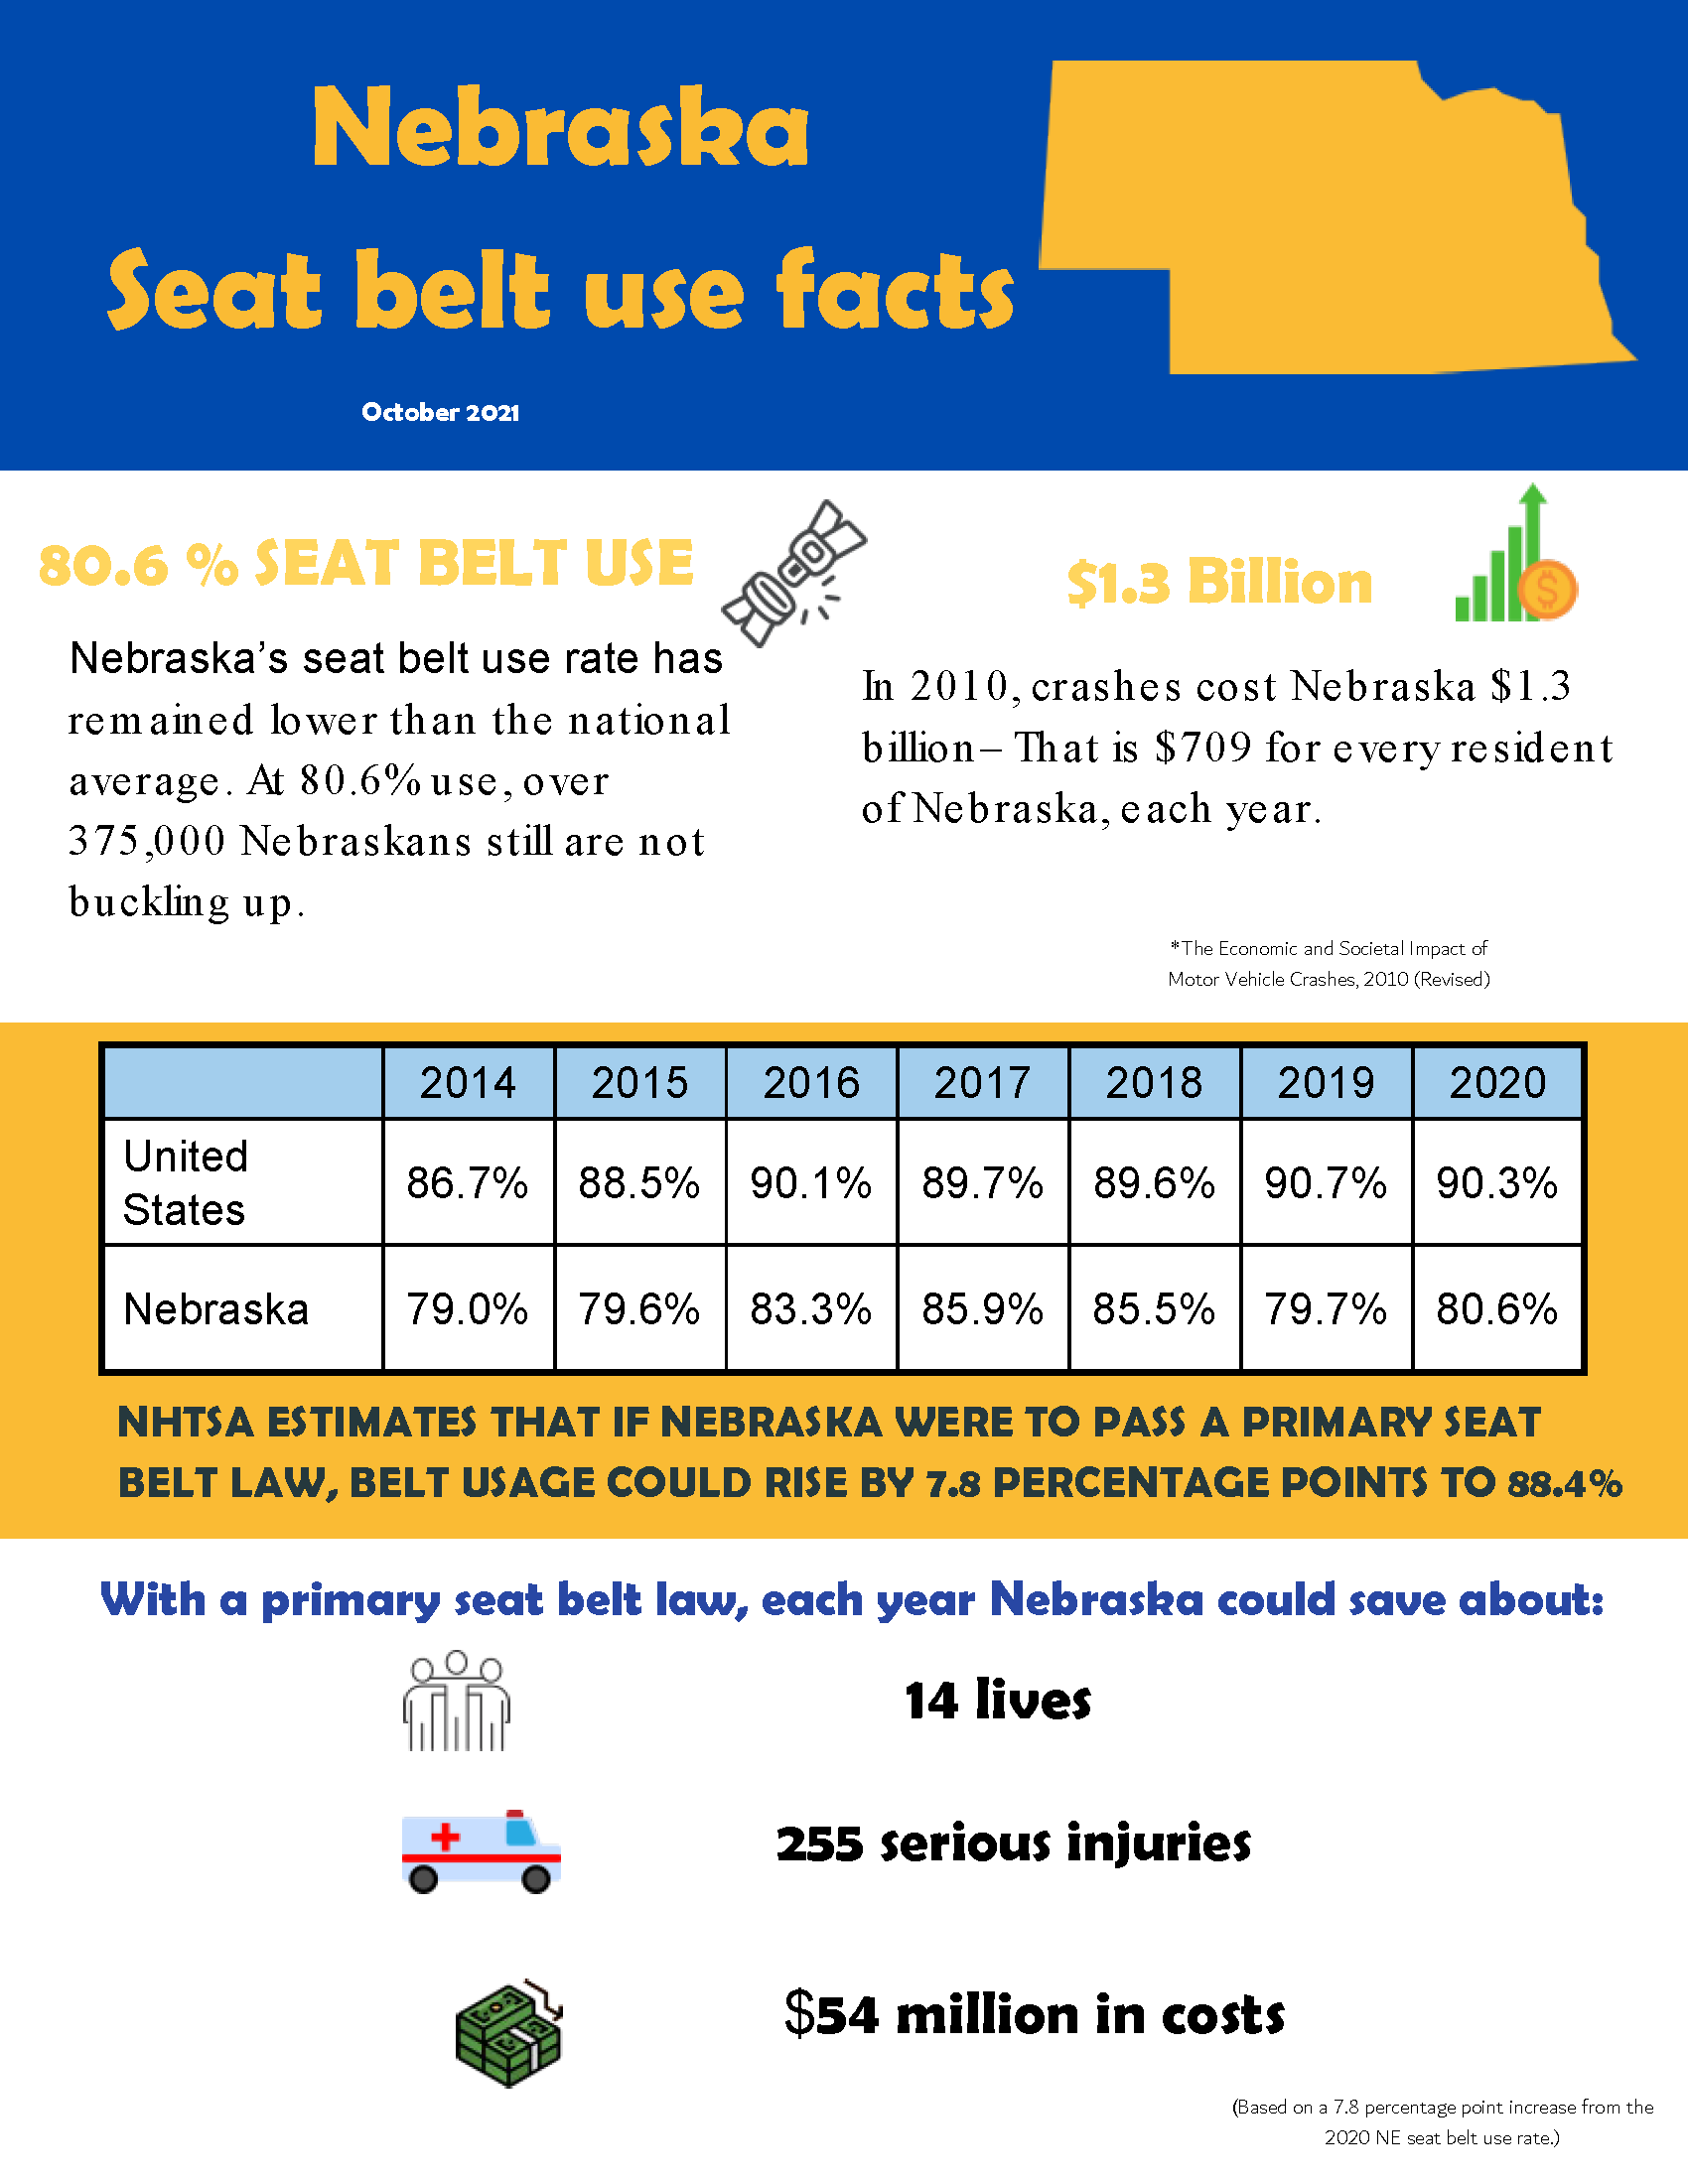 Seat Belt Validation